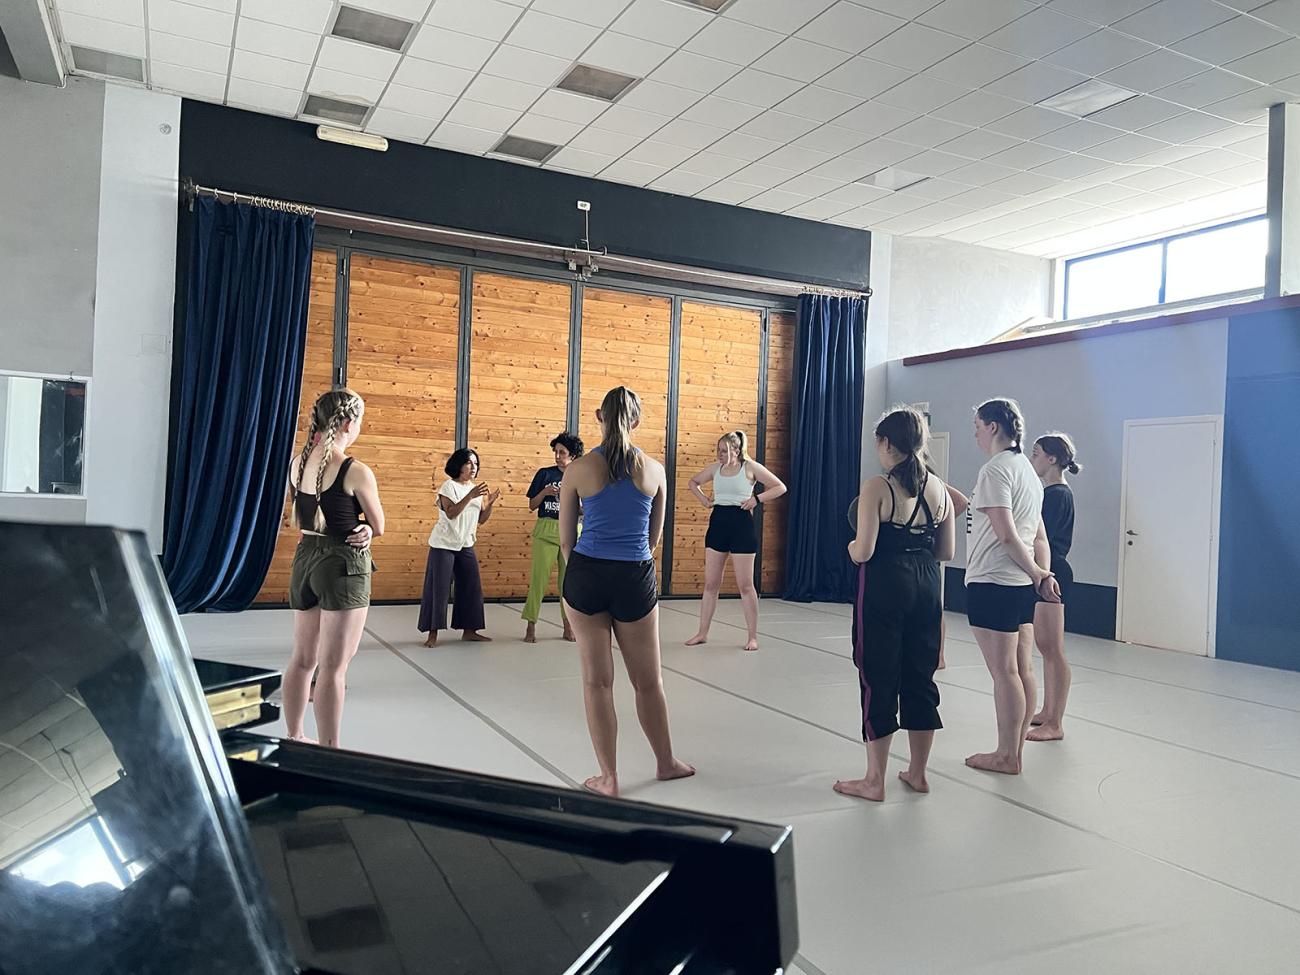 Dancers in a studio in Italy